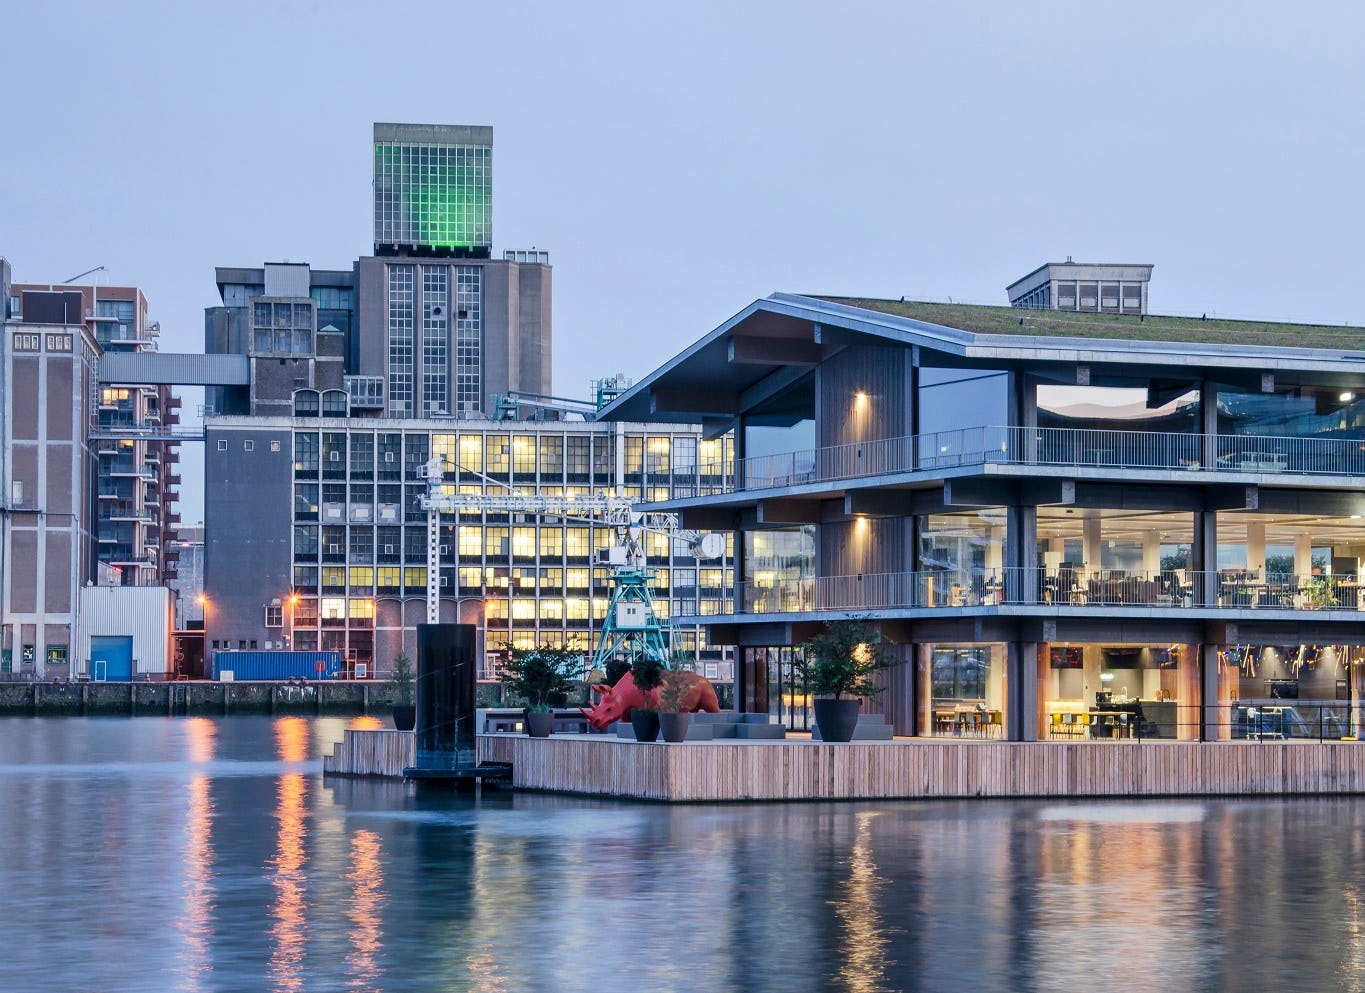 Drijvend kantoor in Rotterdam wint Europese warmtepomp-award